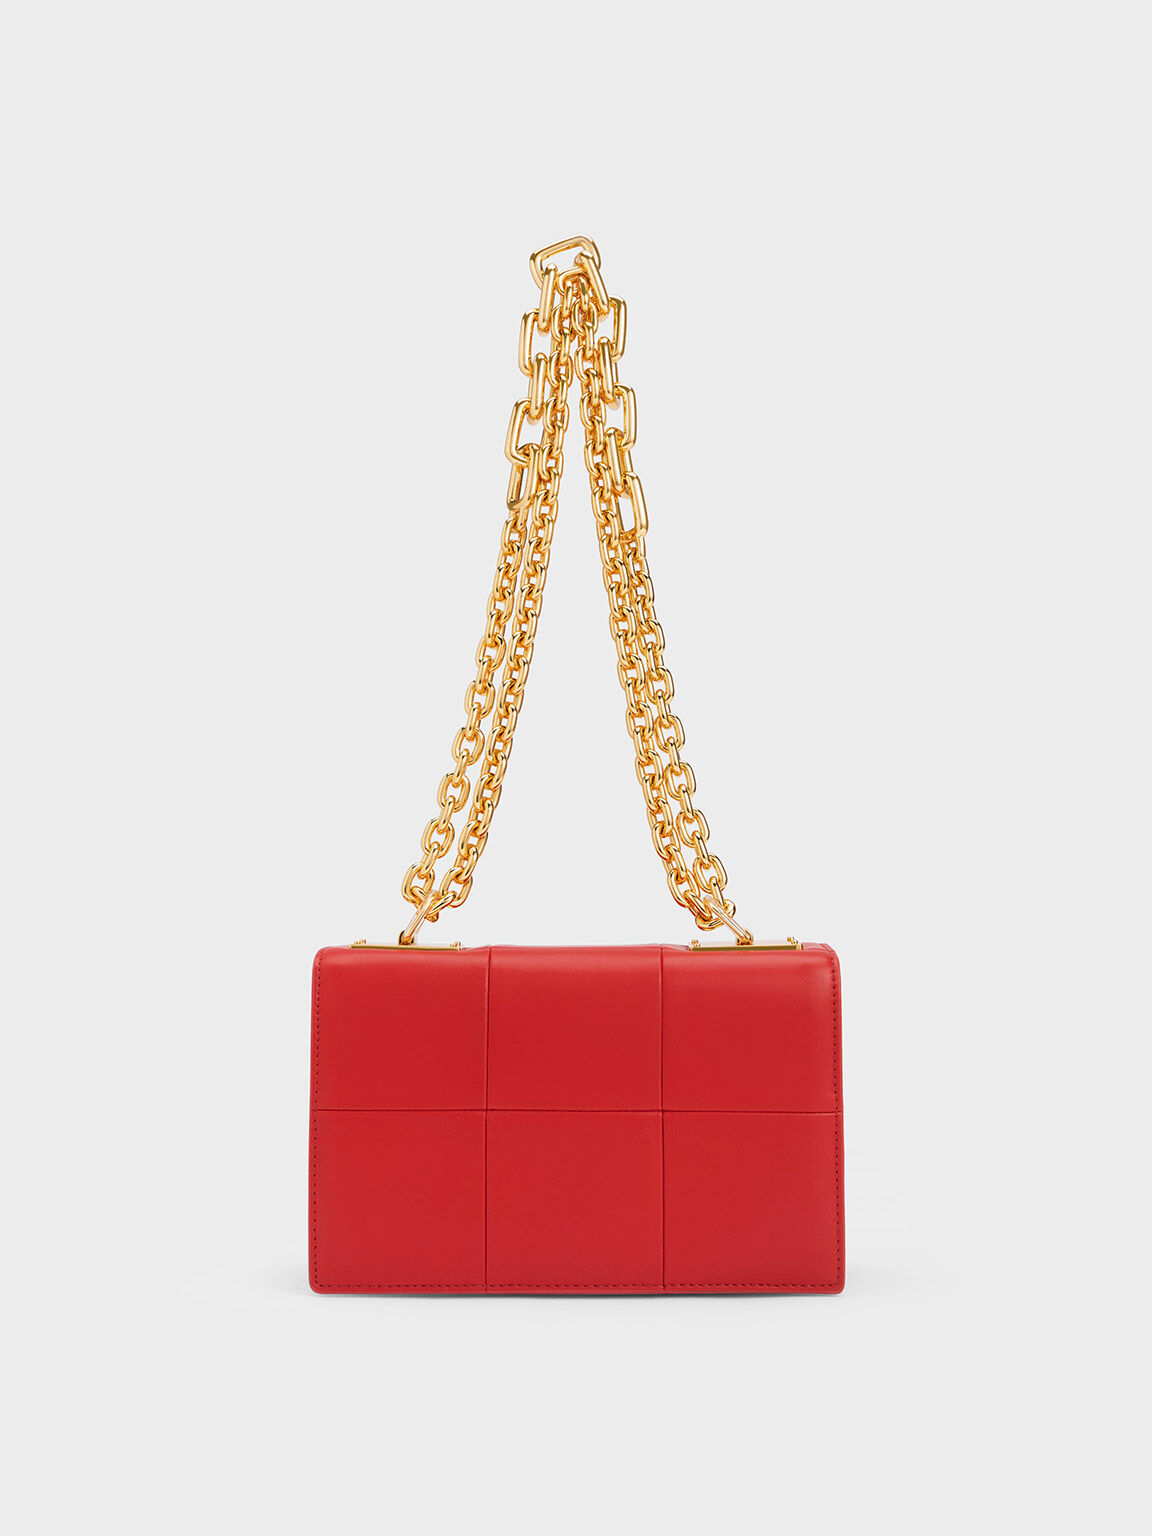 Georgette Chain Handle Bag, Red, hi-res